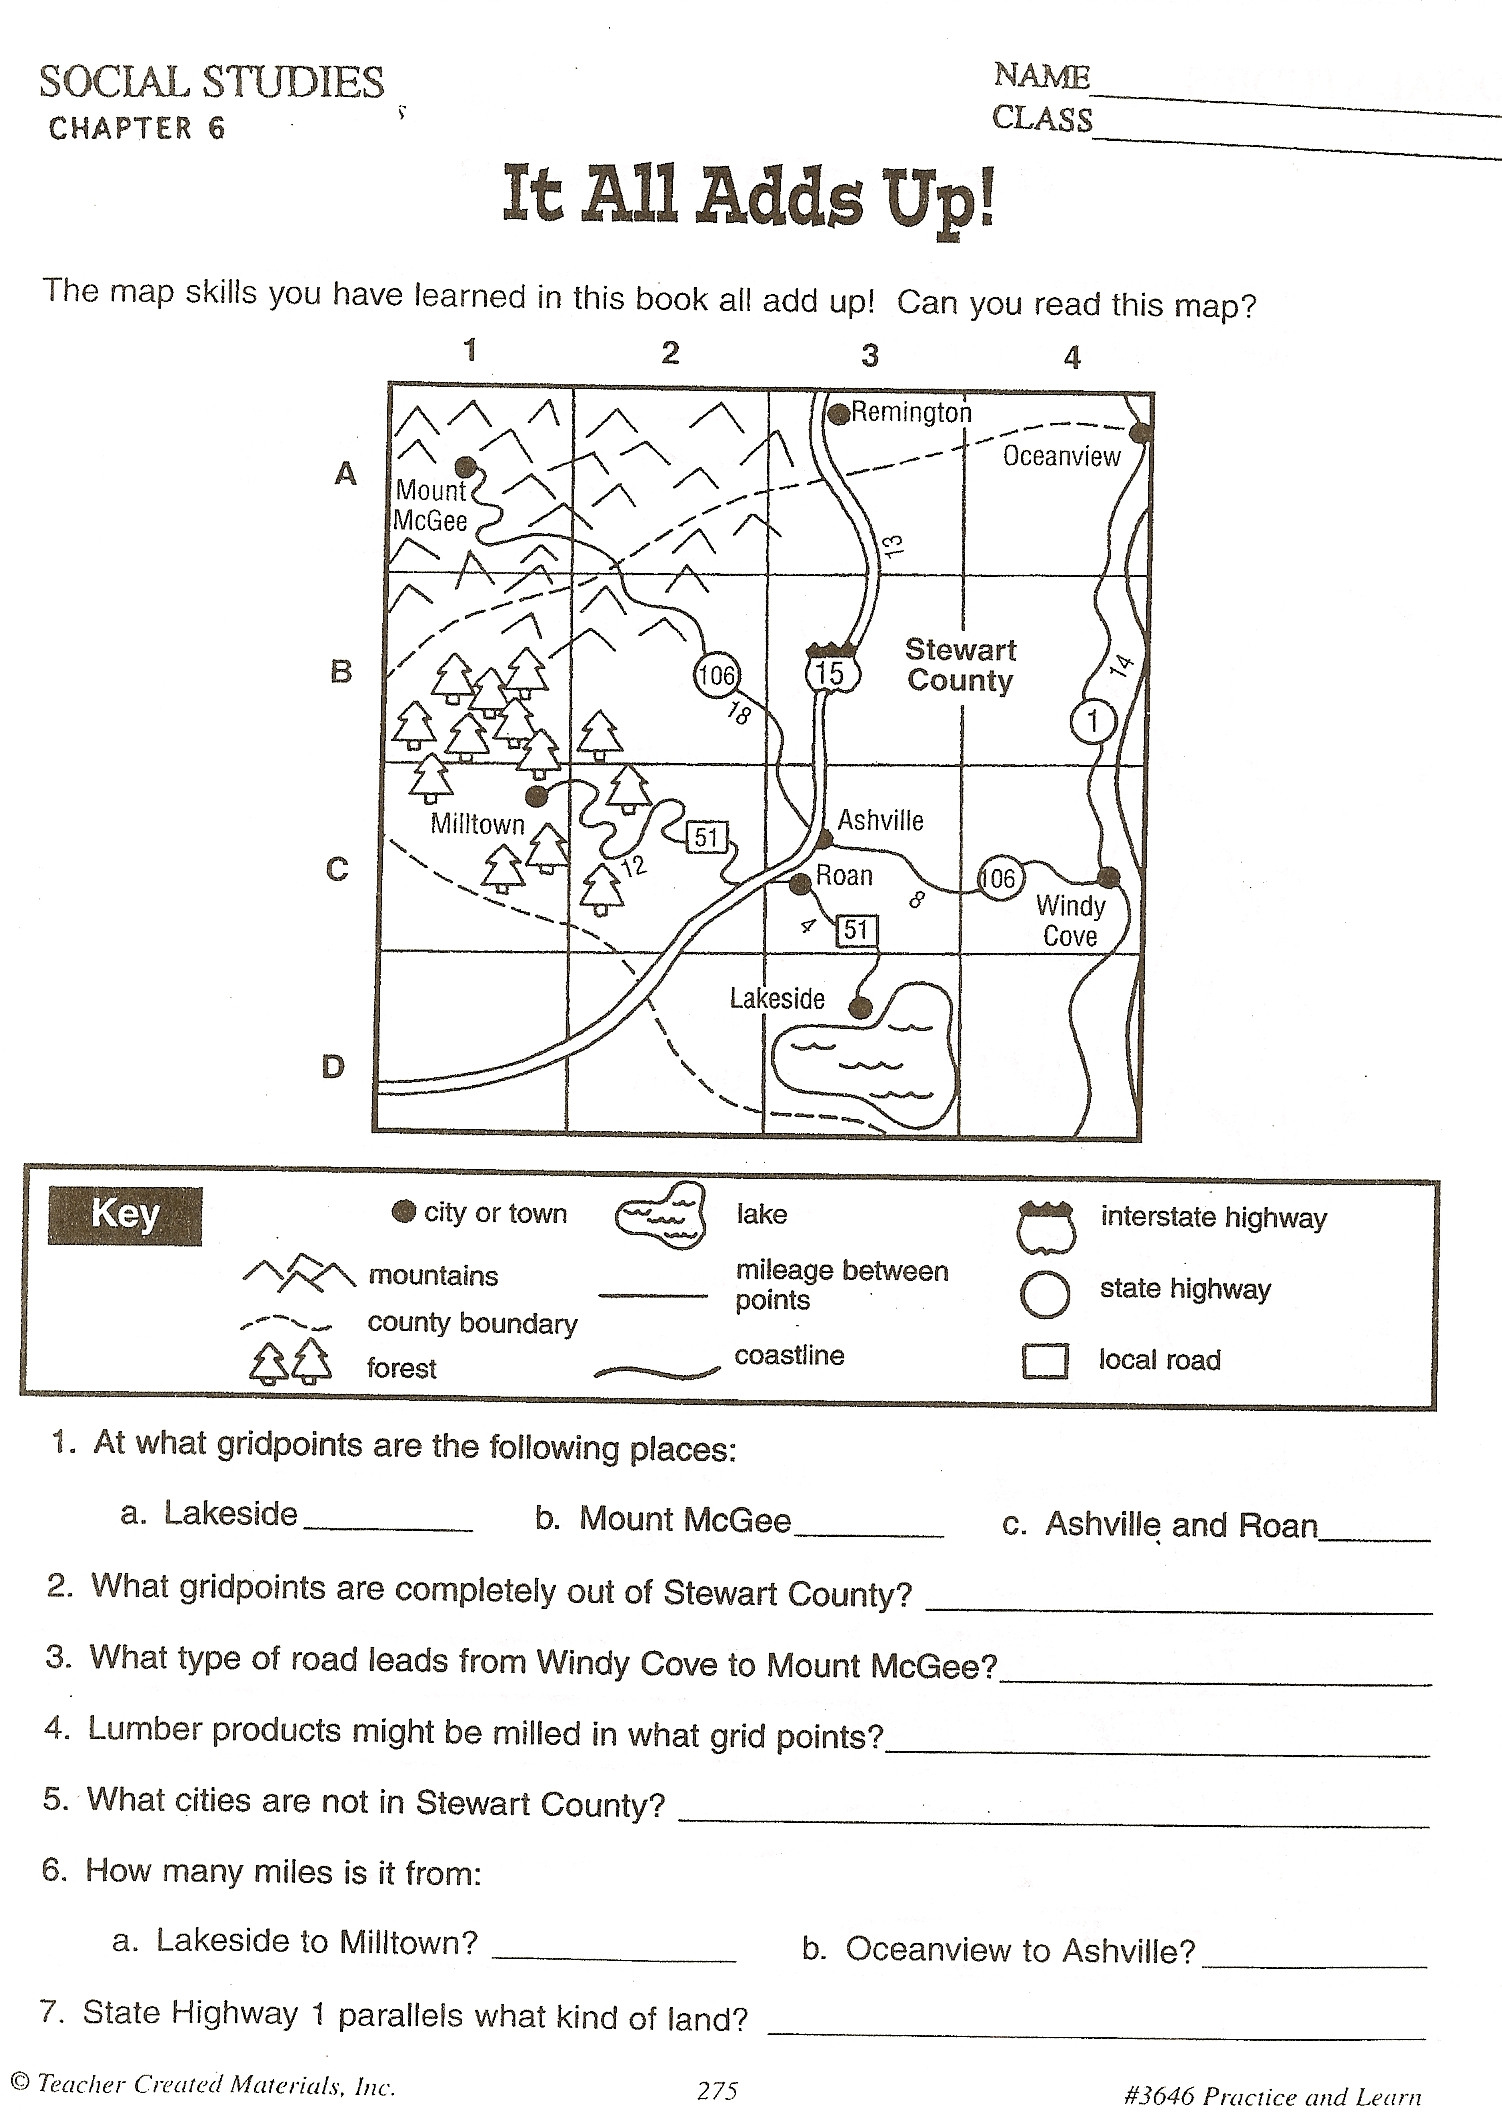 4th-grade-social-studies-worksheets-for-free-math-worksheet-for-kids